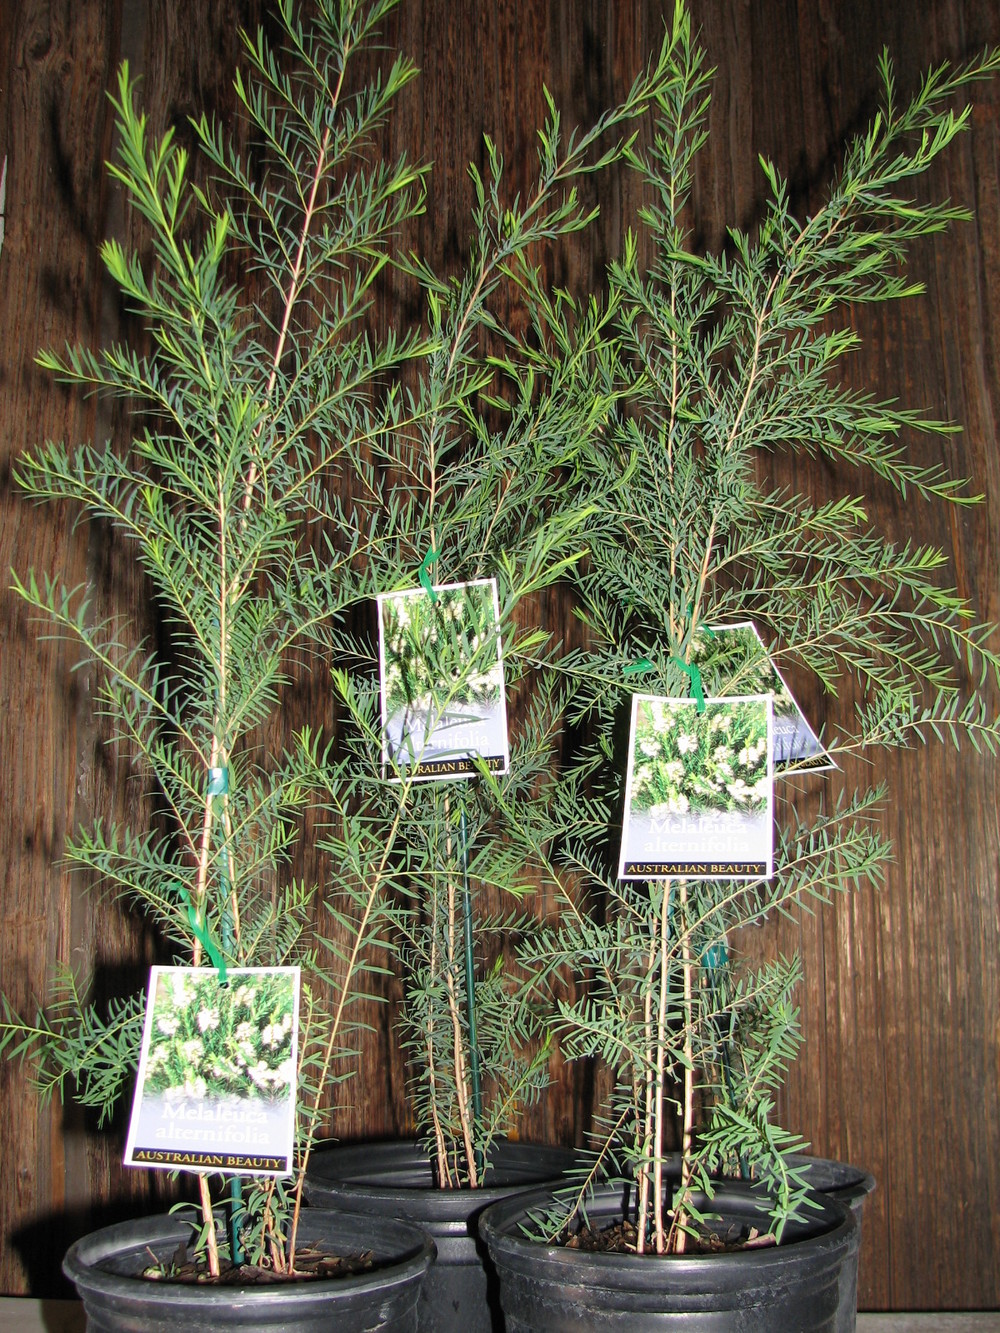 melaleuca alternifolia - medicinal tea tree oil — australian